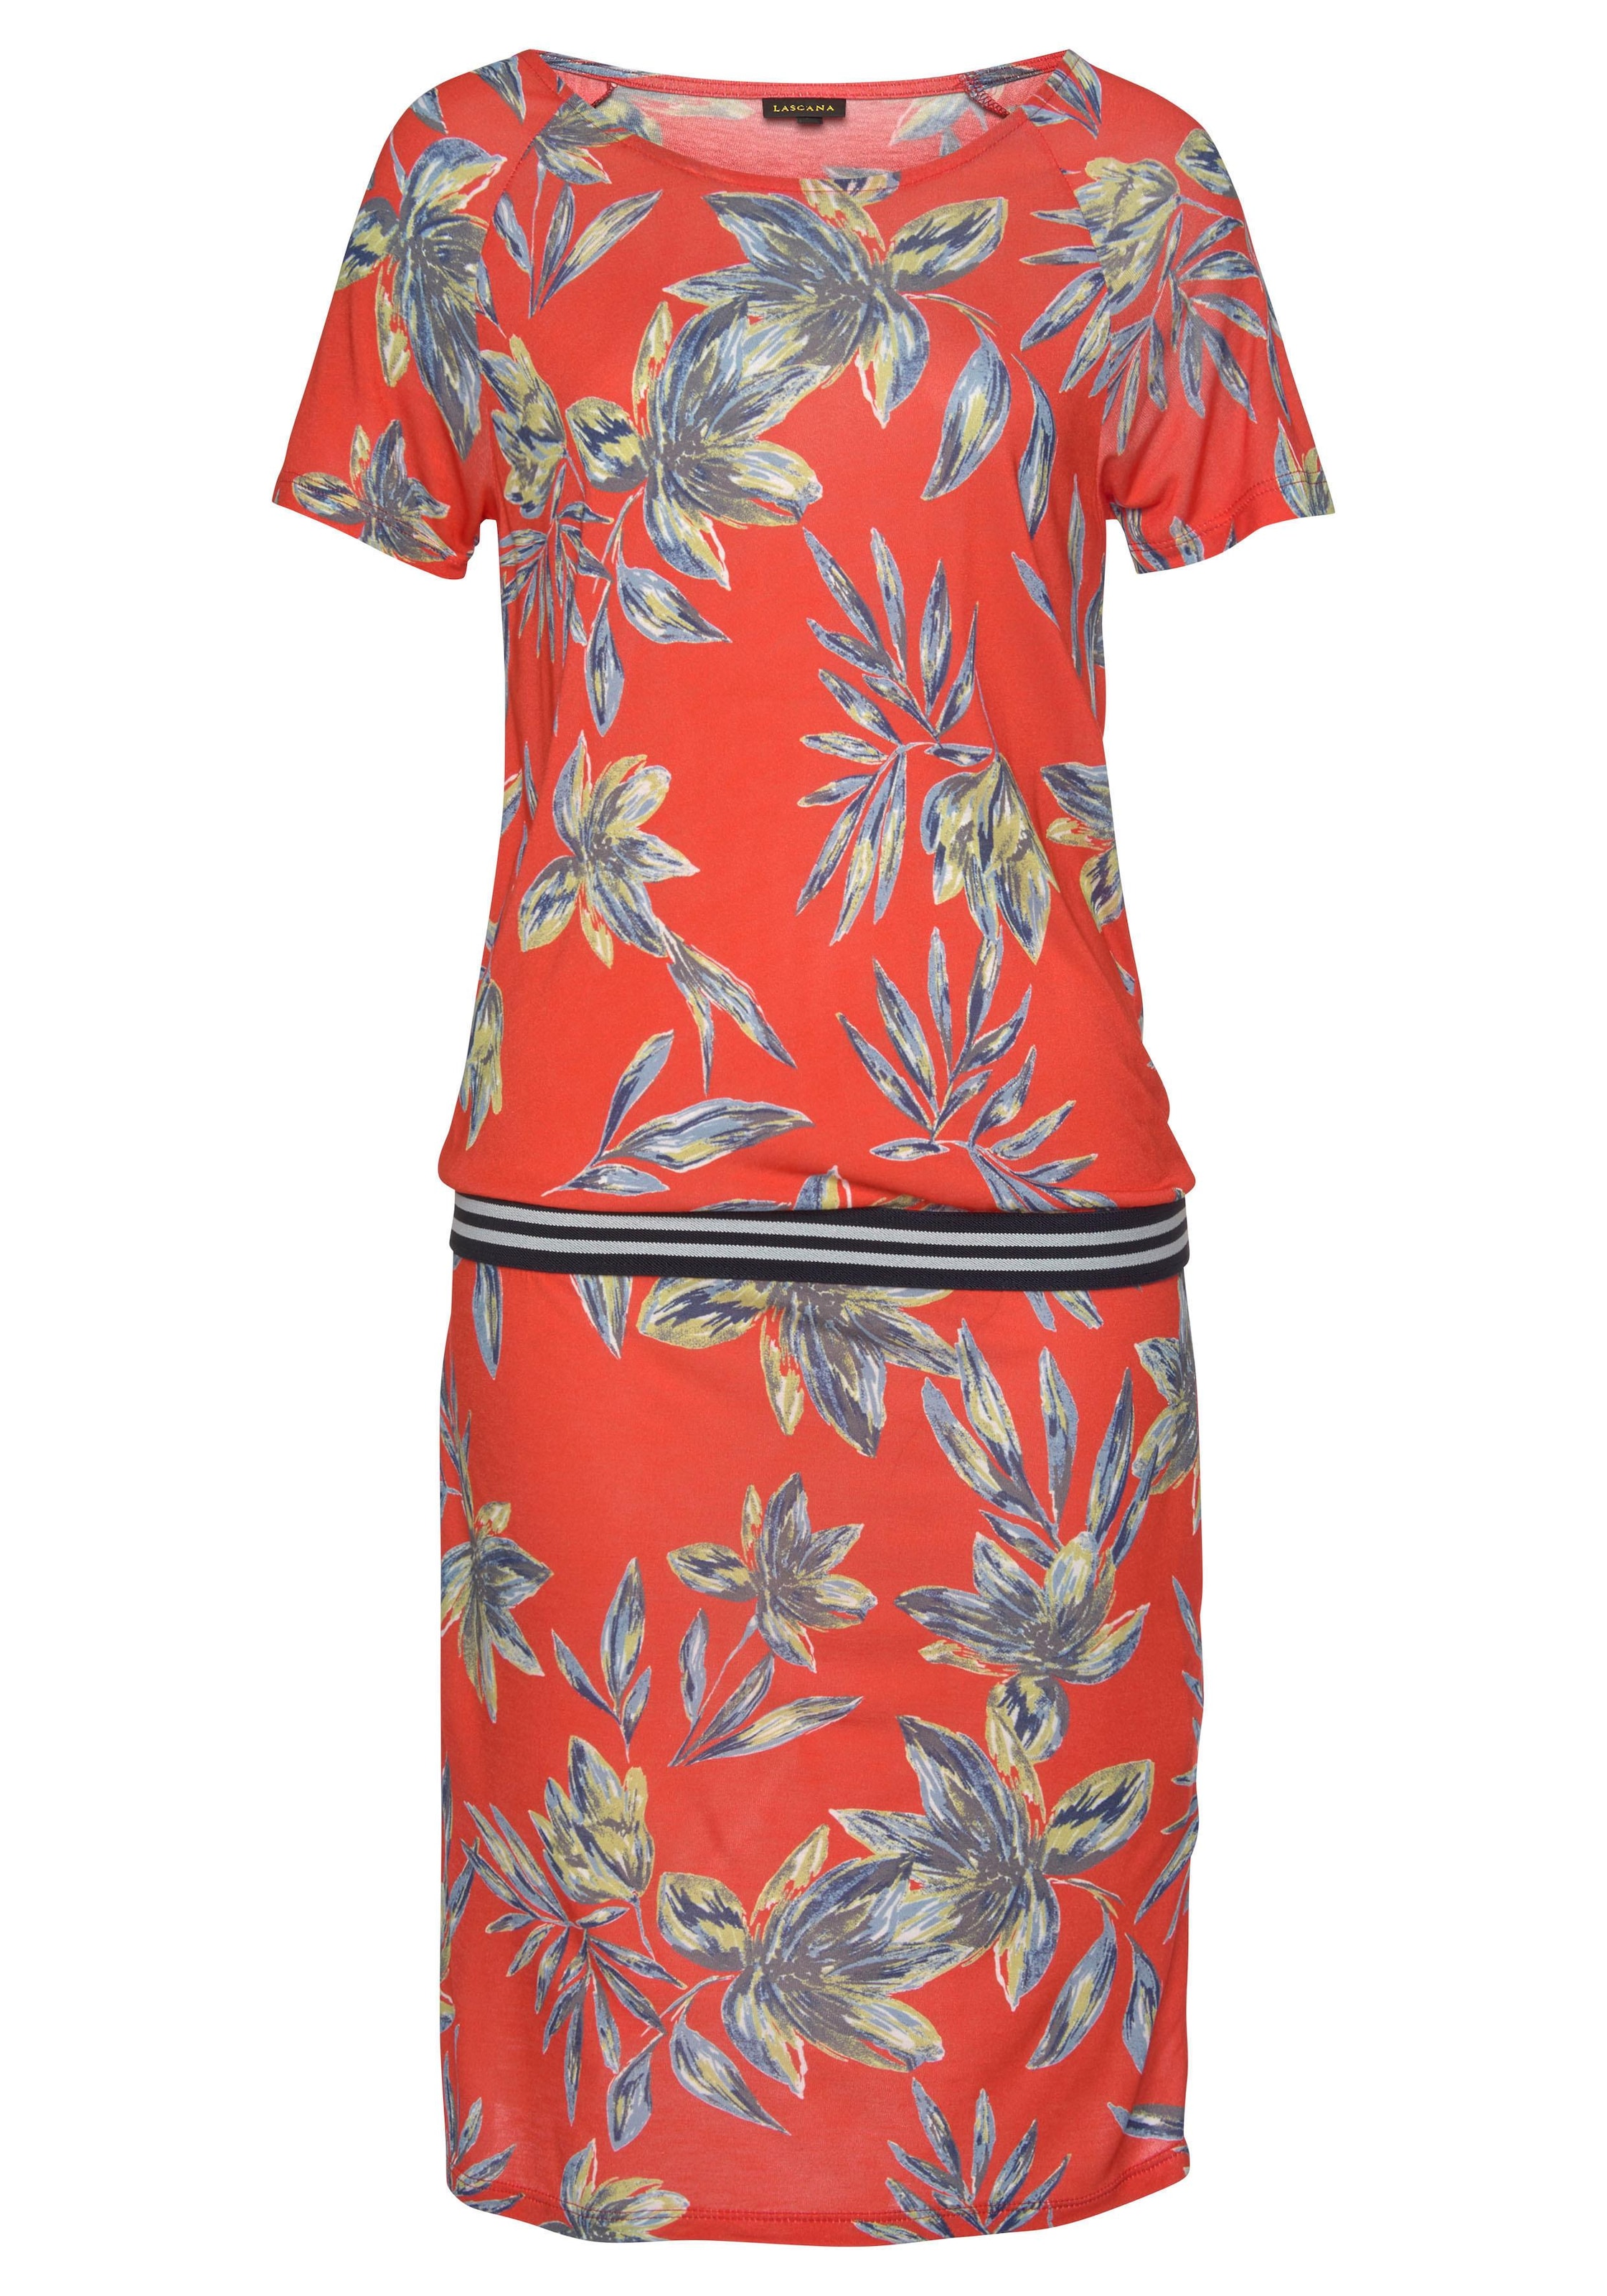 LASCANA Strandkleid, mit Alloverprint, kurzes T-Shirtkleid, Sommerkleid